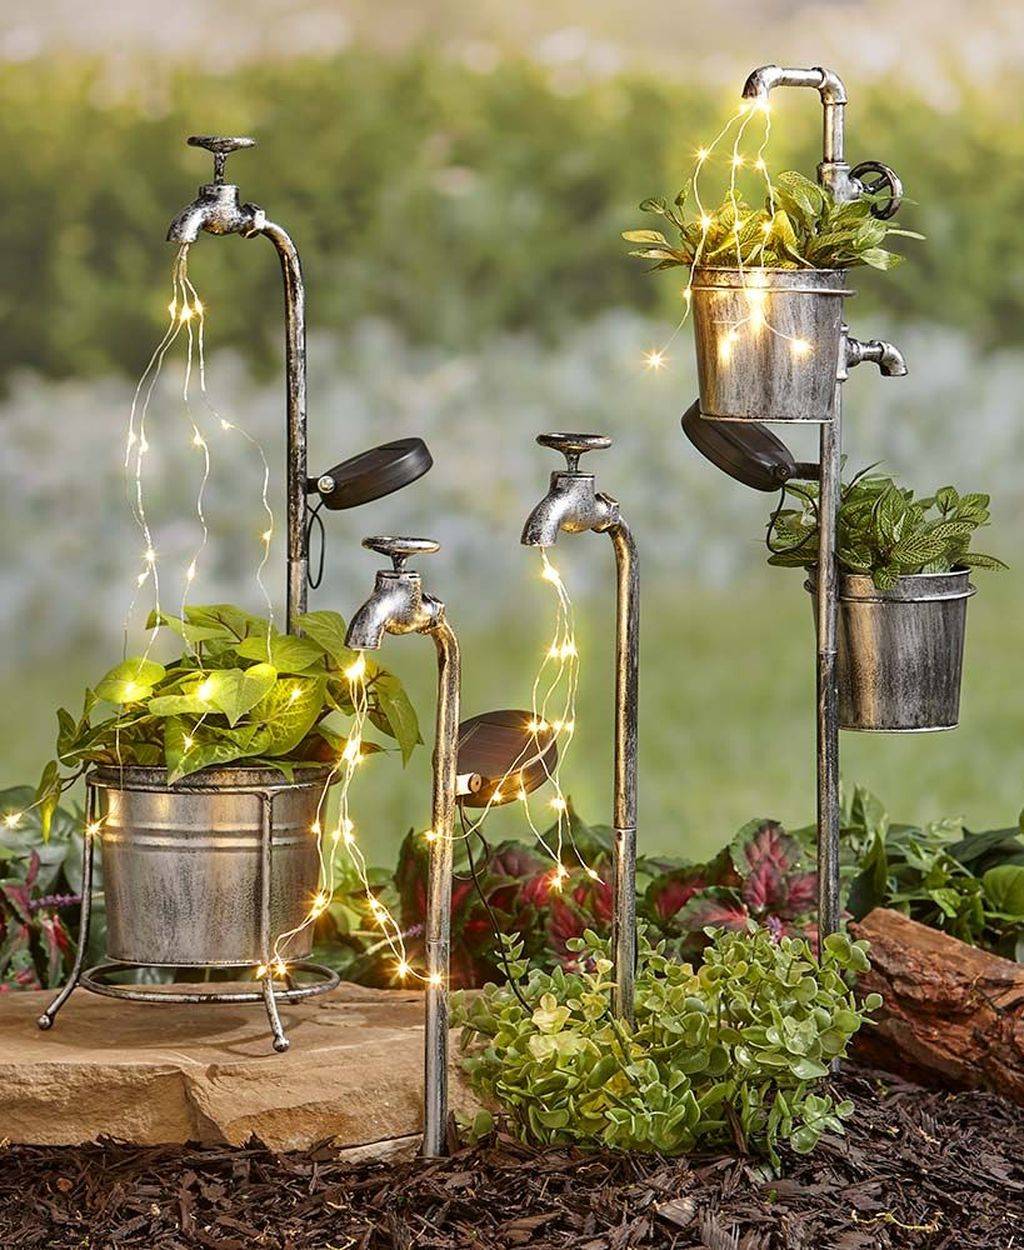 Unique Garden Ideas